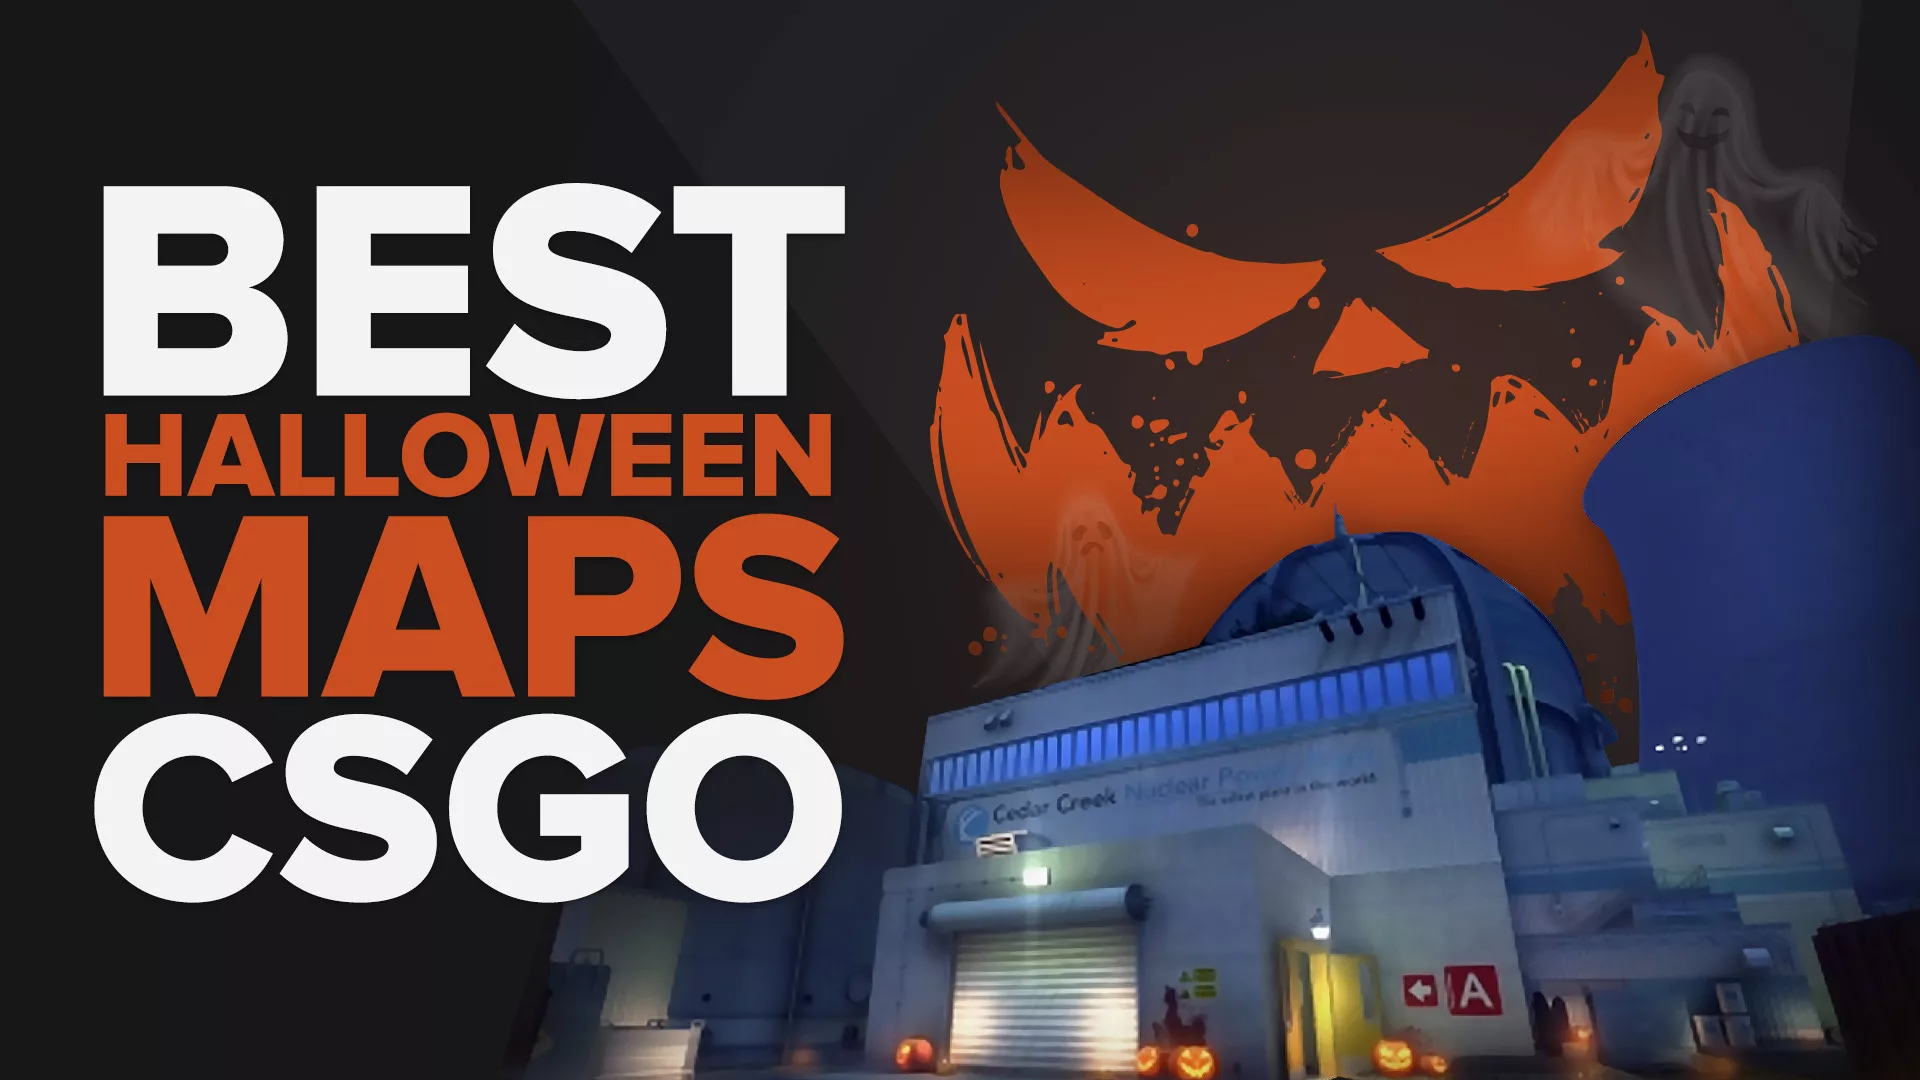 The Best Halloween Maps in CSGO